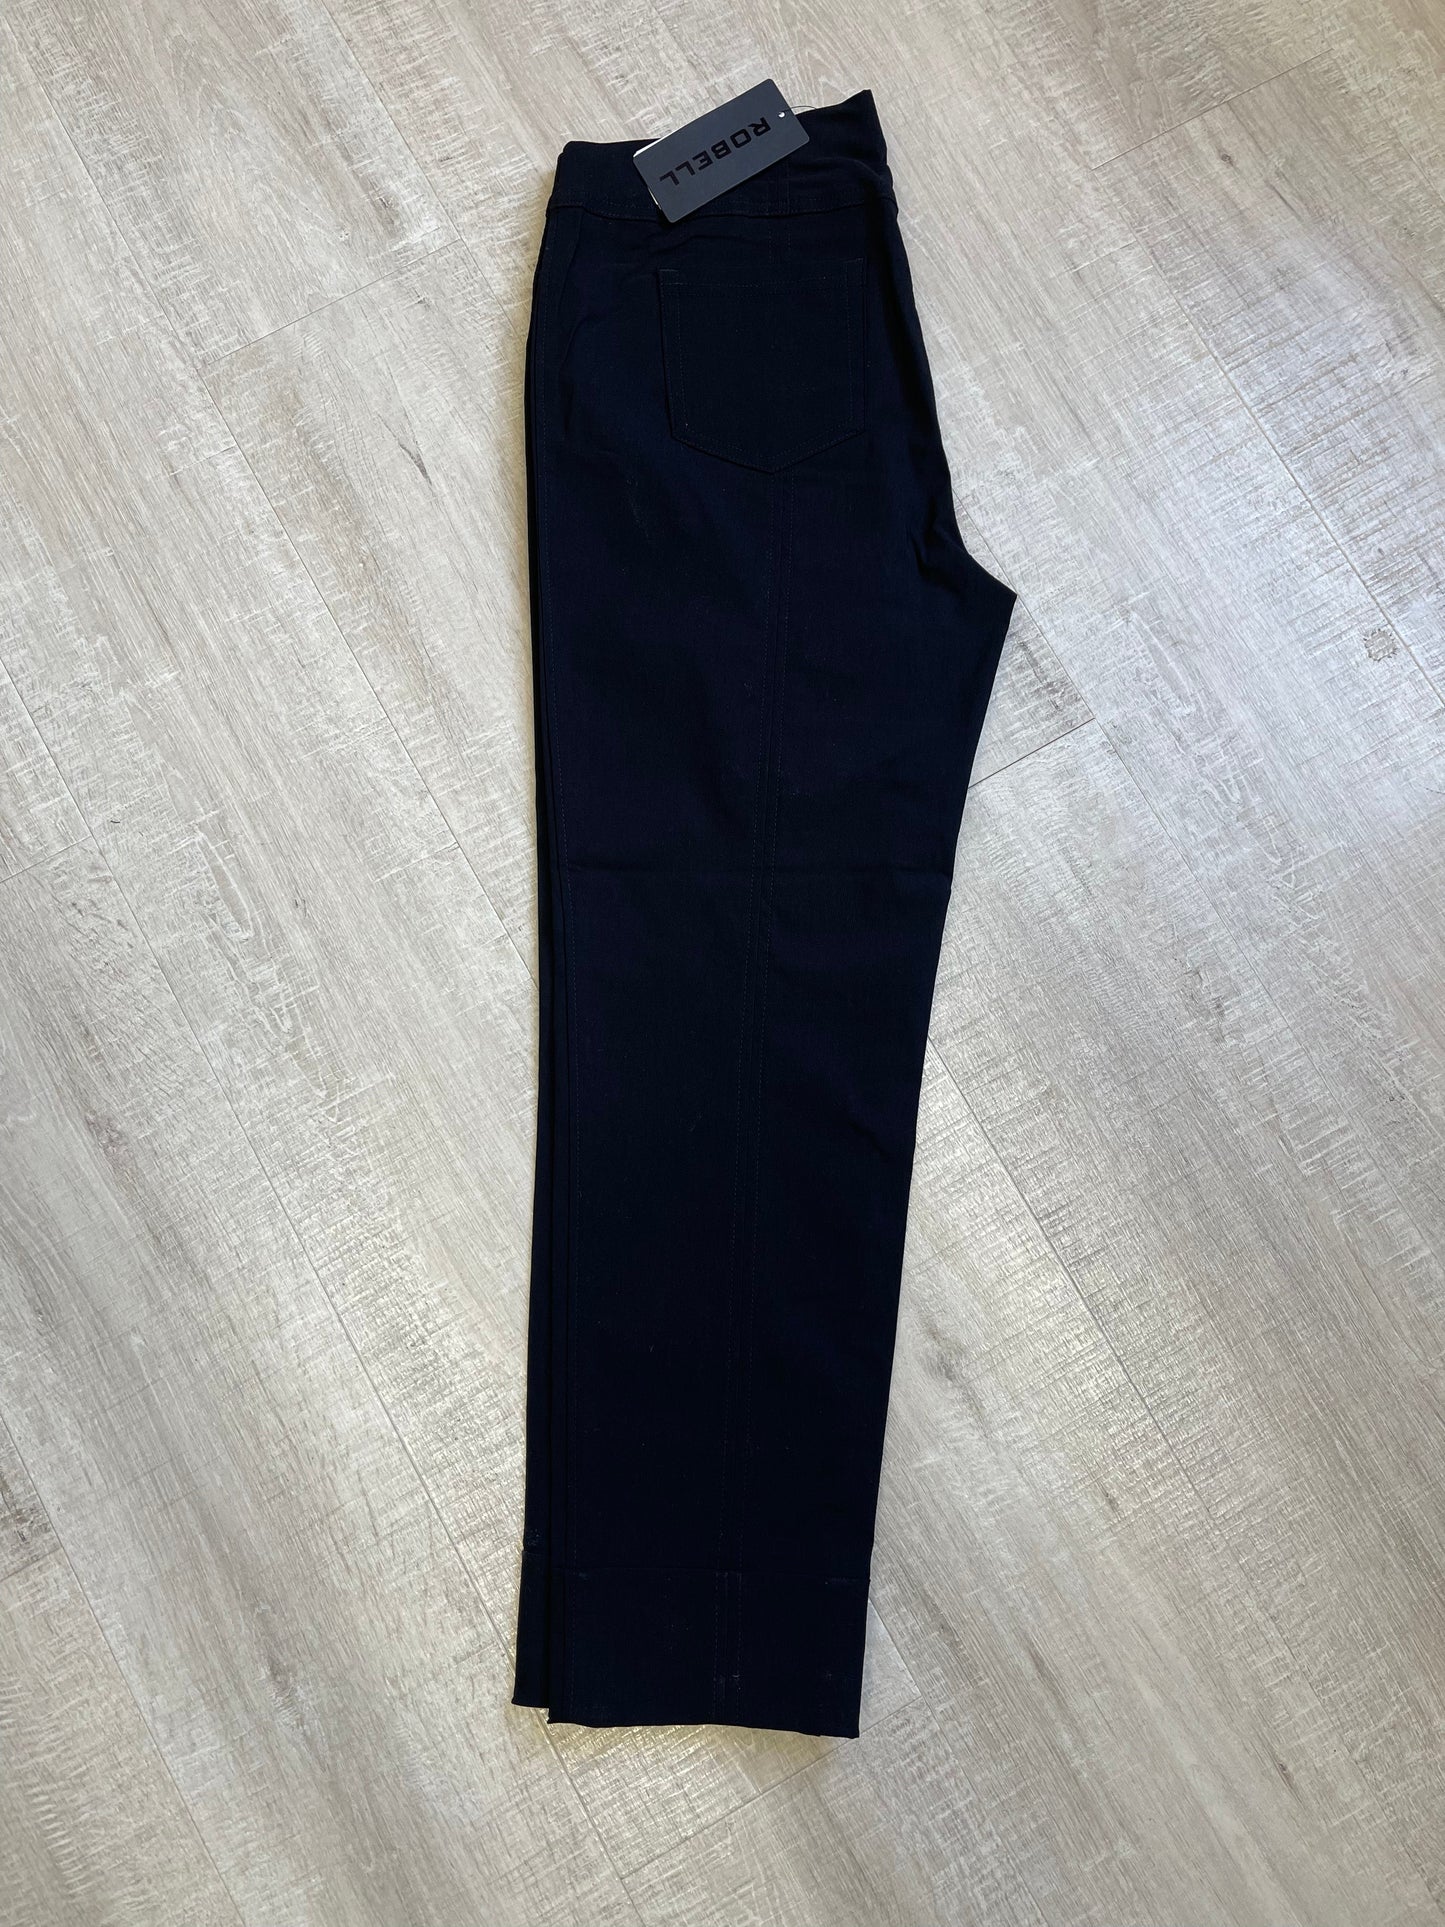 Robell Bella black trousers 27 inch inside leg sizes 12-26